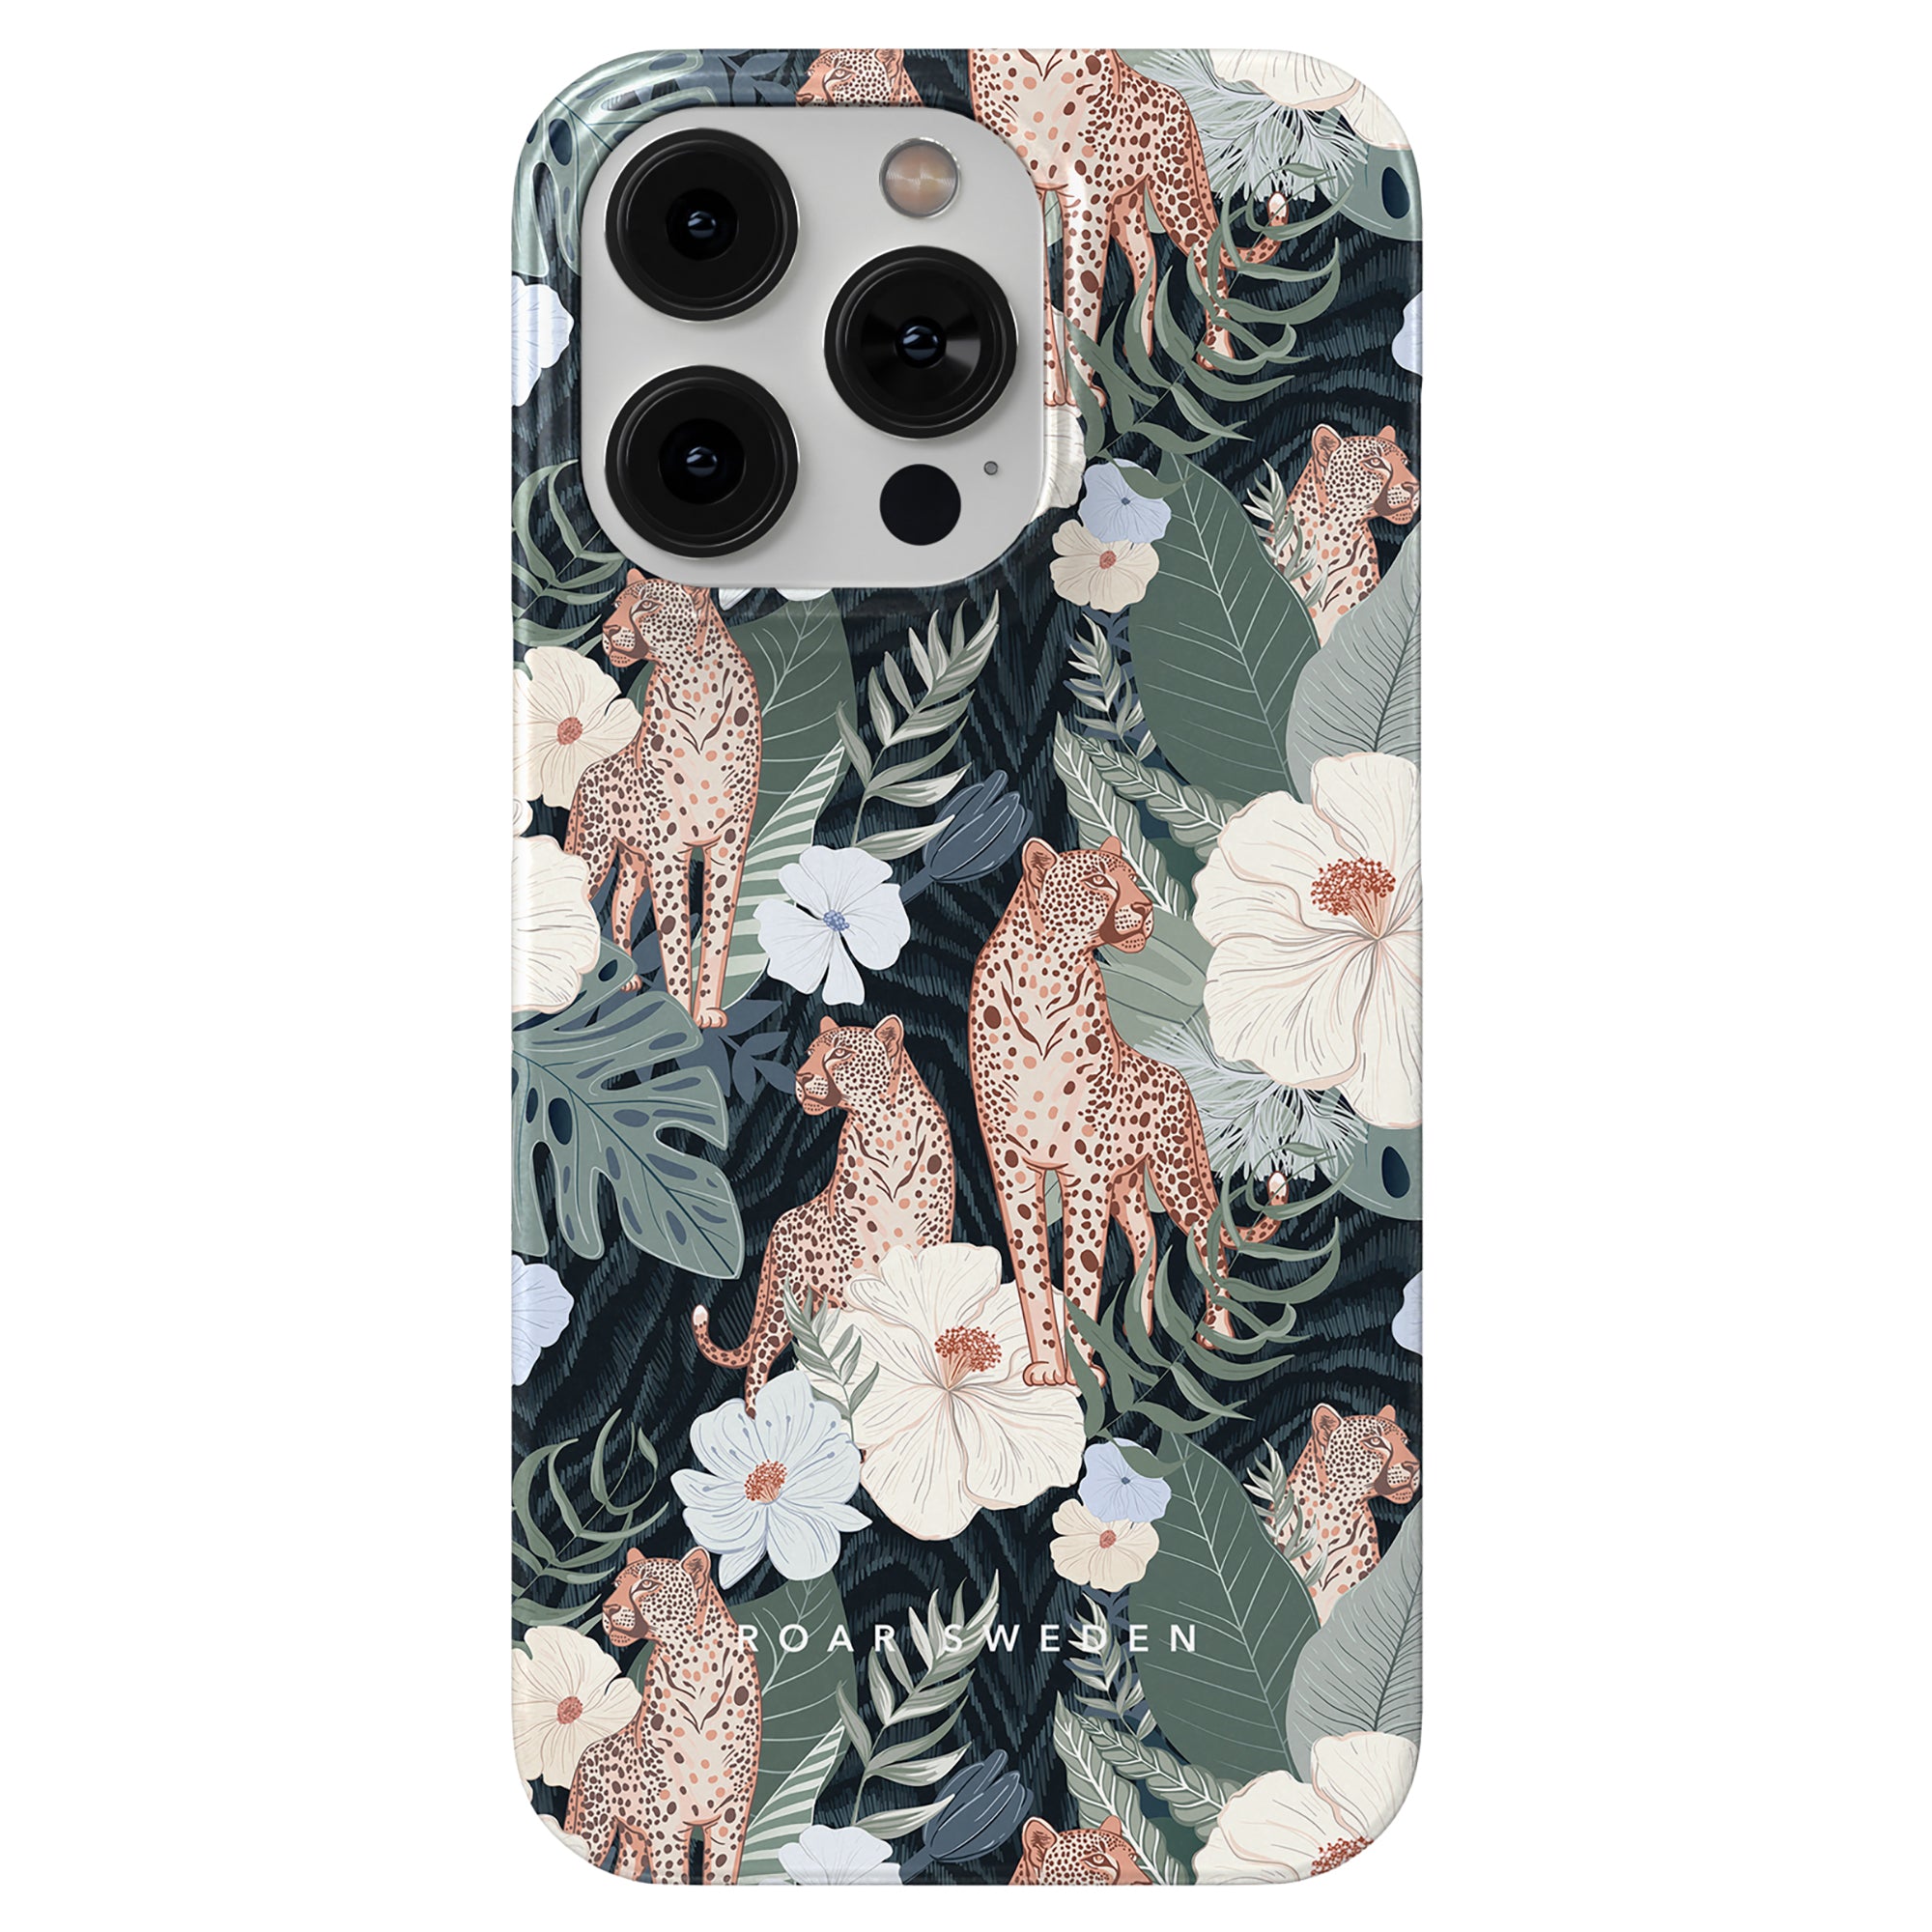 Leopardess - Slim case smartphone case.